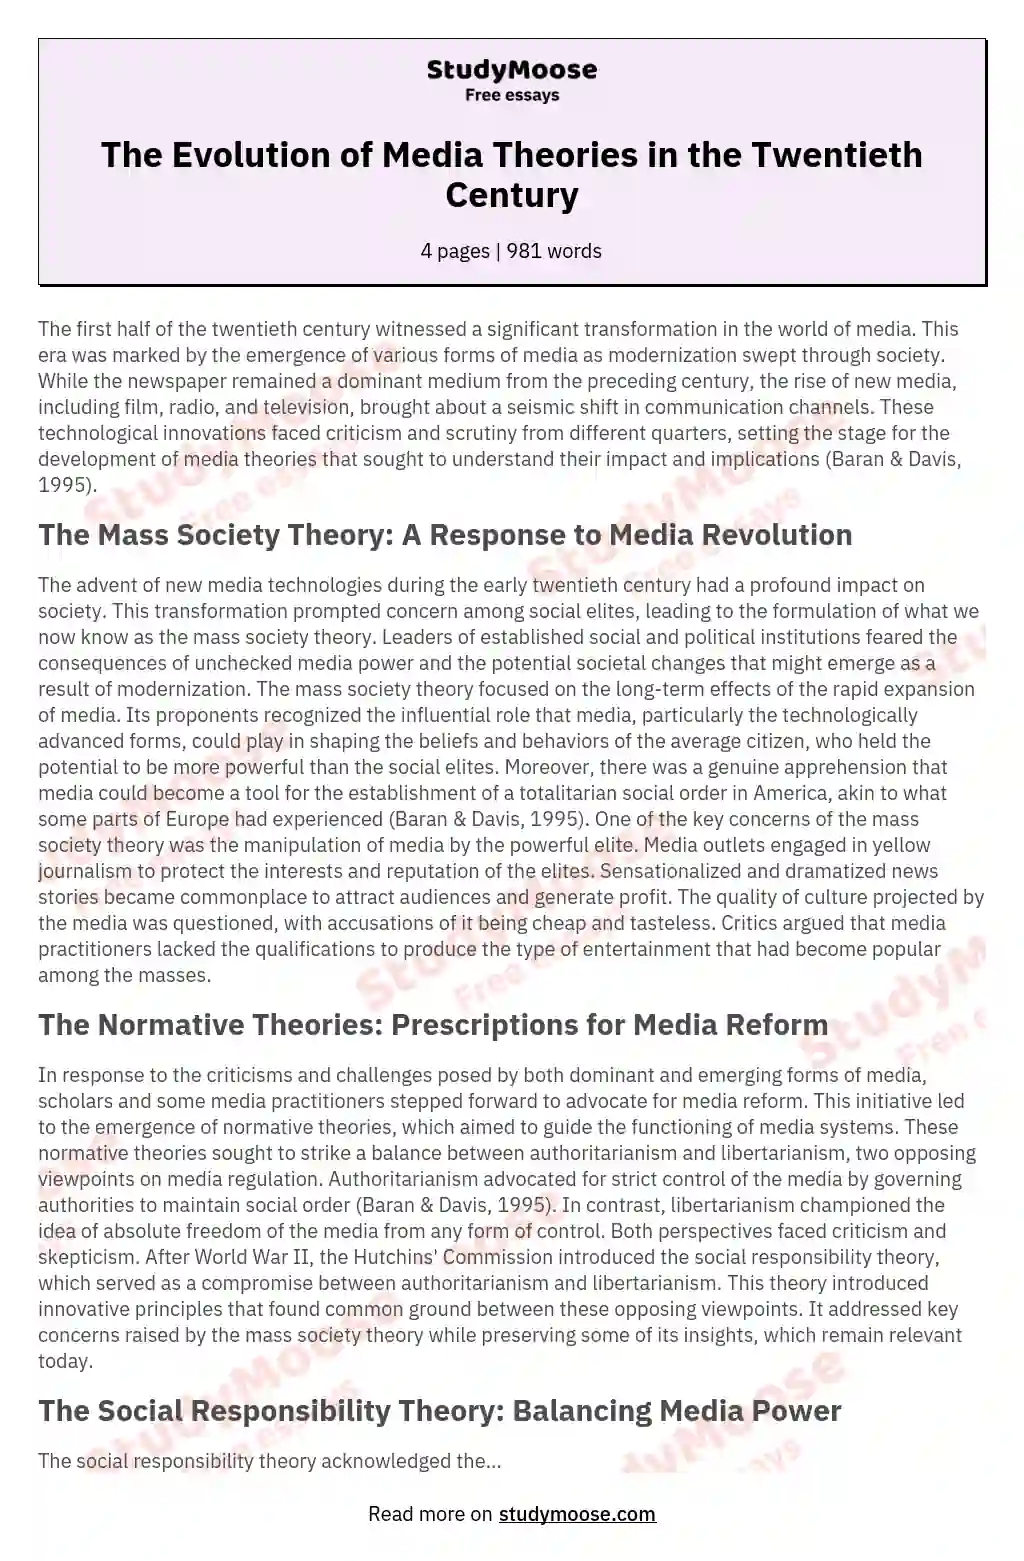 The Evolution of Media Theories in the Twentieth Century essay